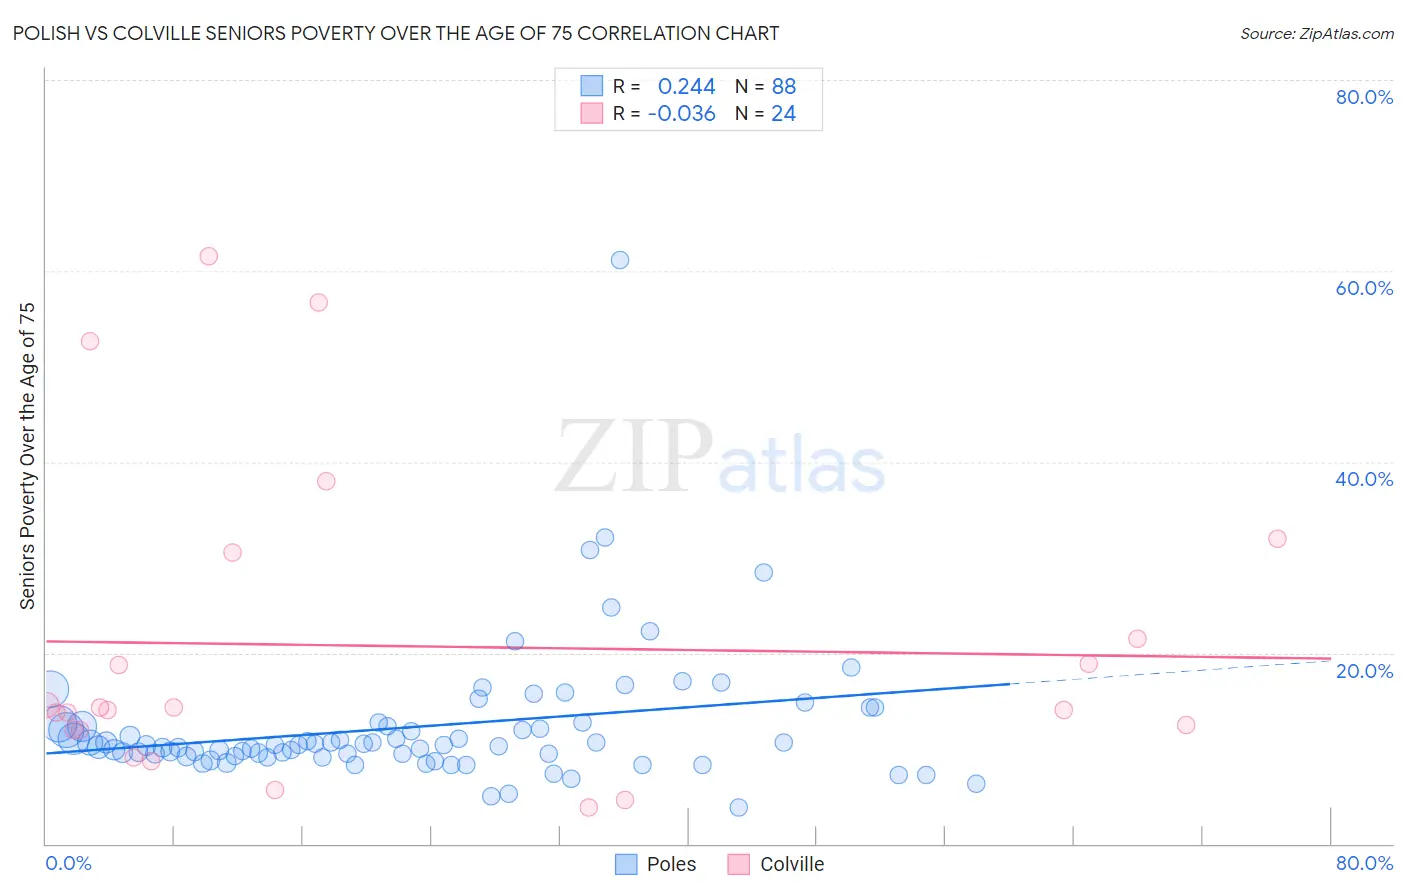 Polish vs Colville Seniors Poverty Over the Age of 75